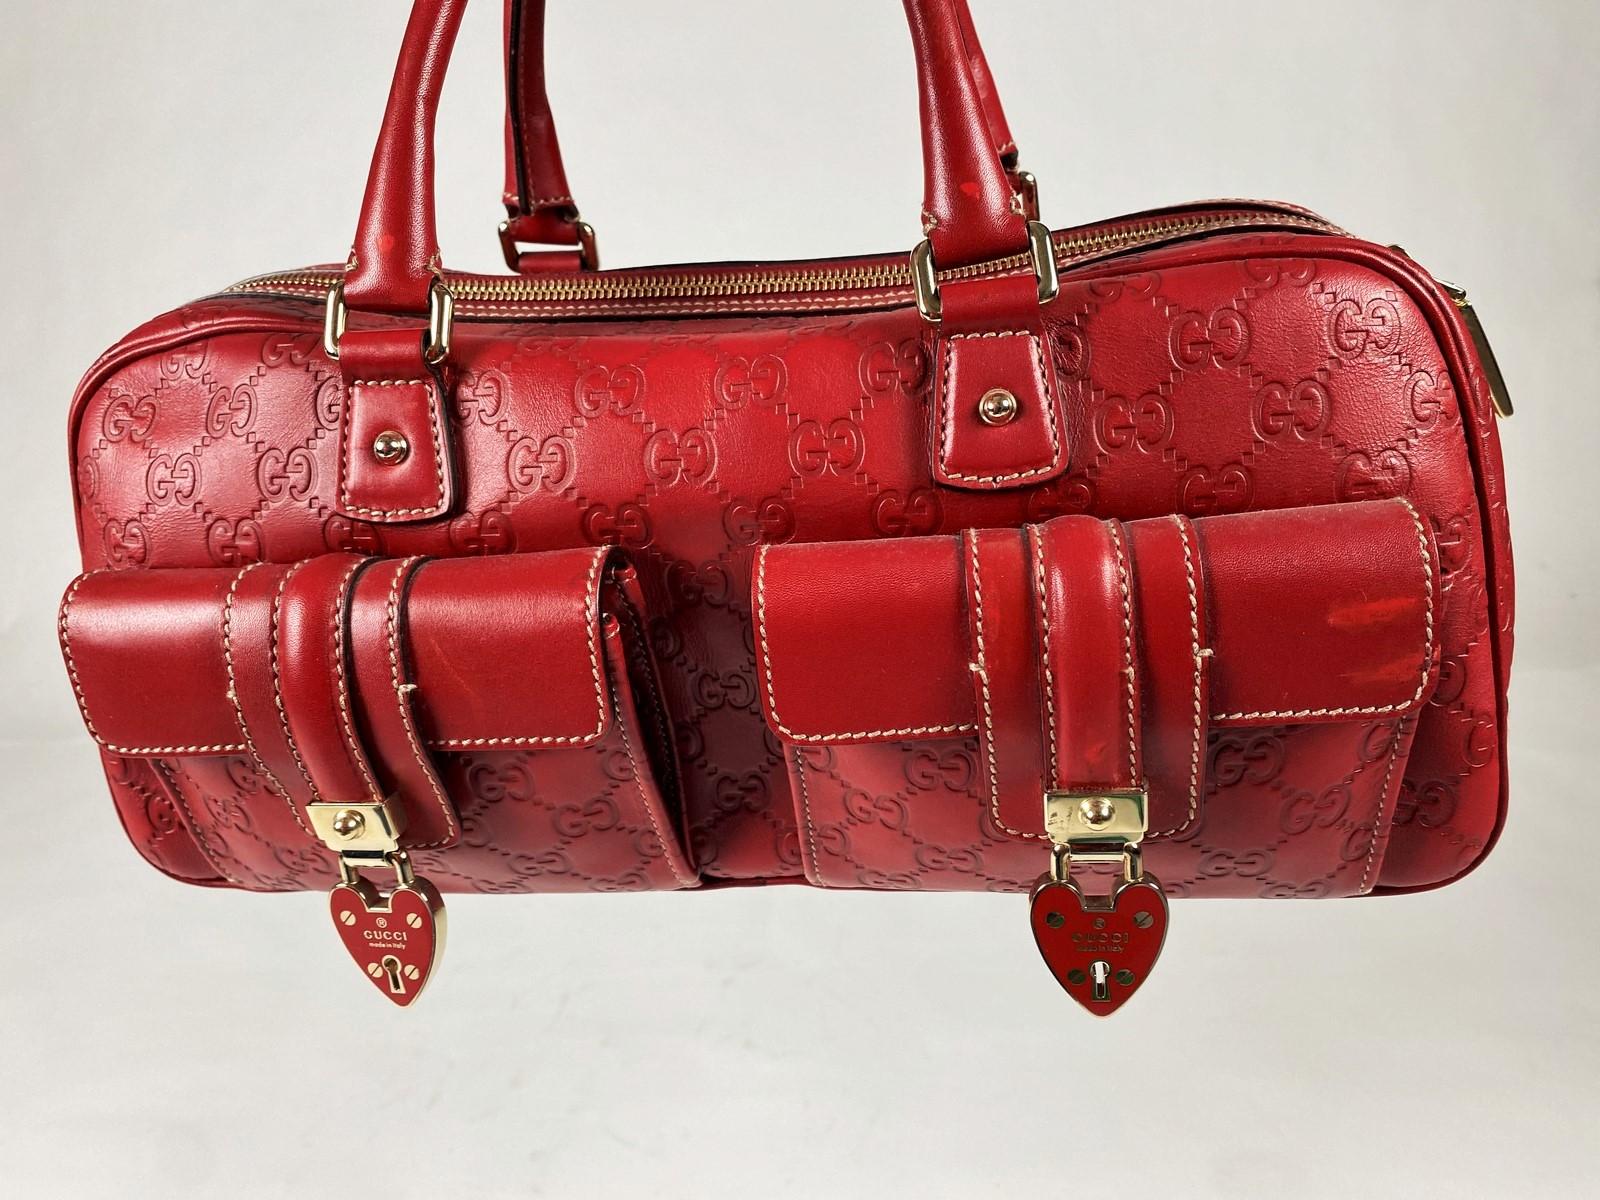 A Rare Joy Boston Heart Padlock Handbag by Gucci - limited edition Circa 2013 2